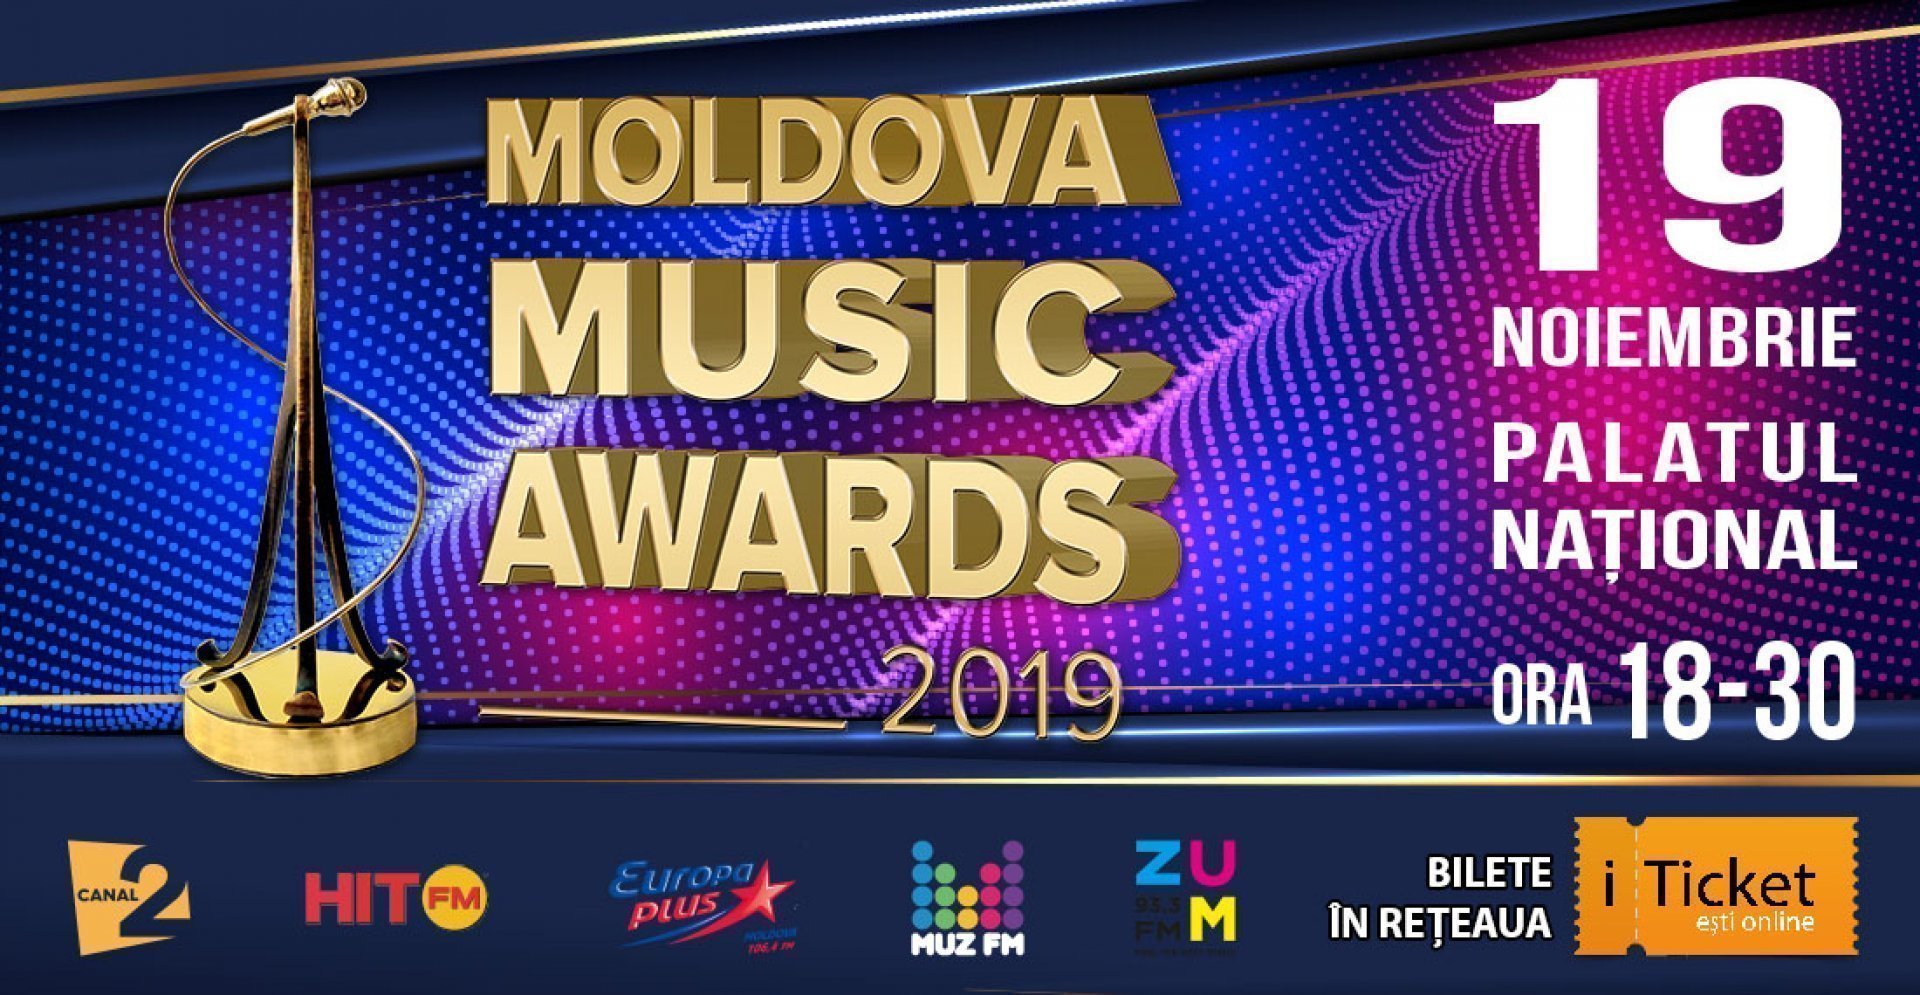 Moldova Music Awards 2019